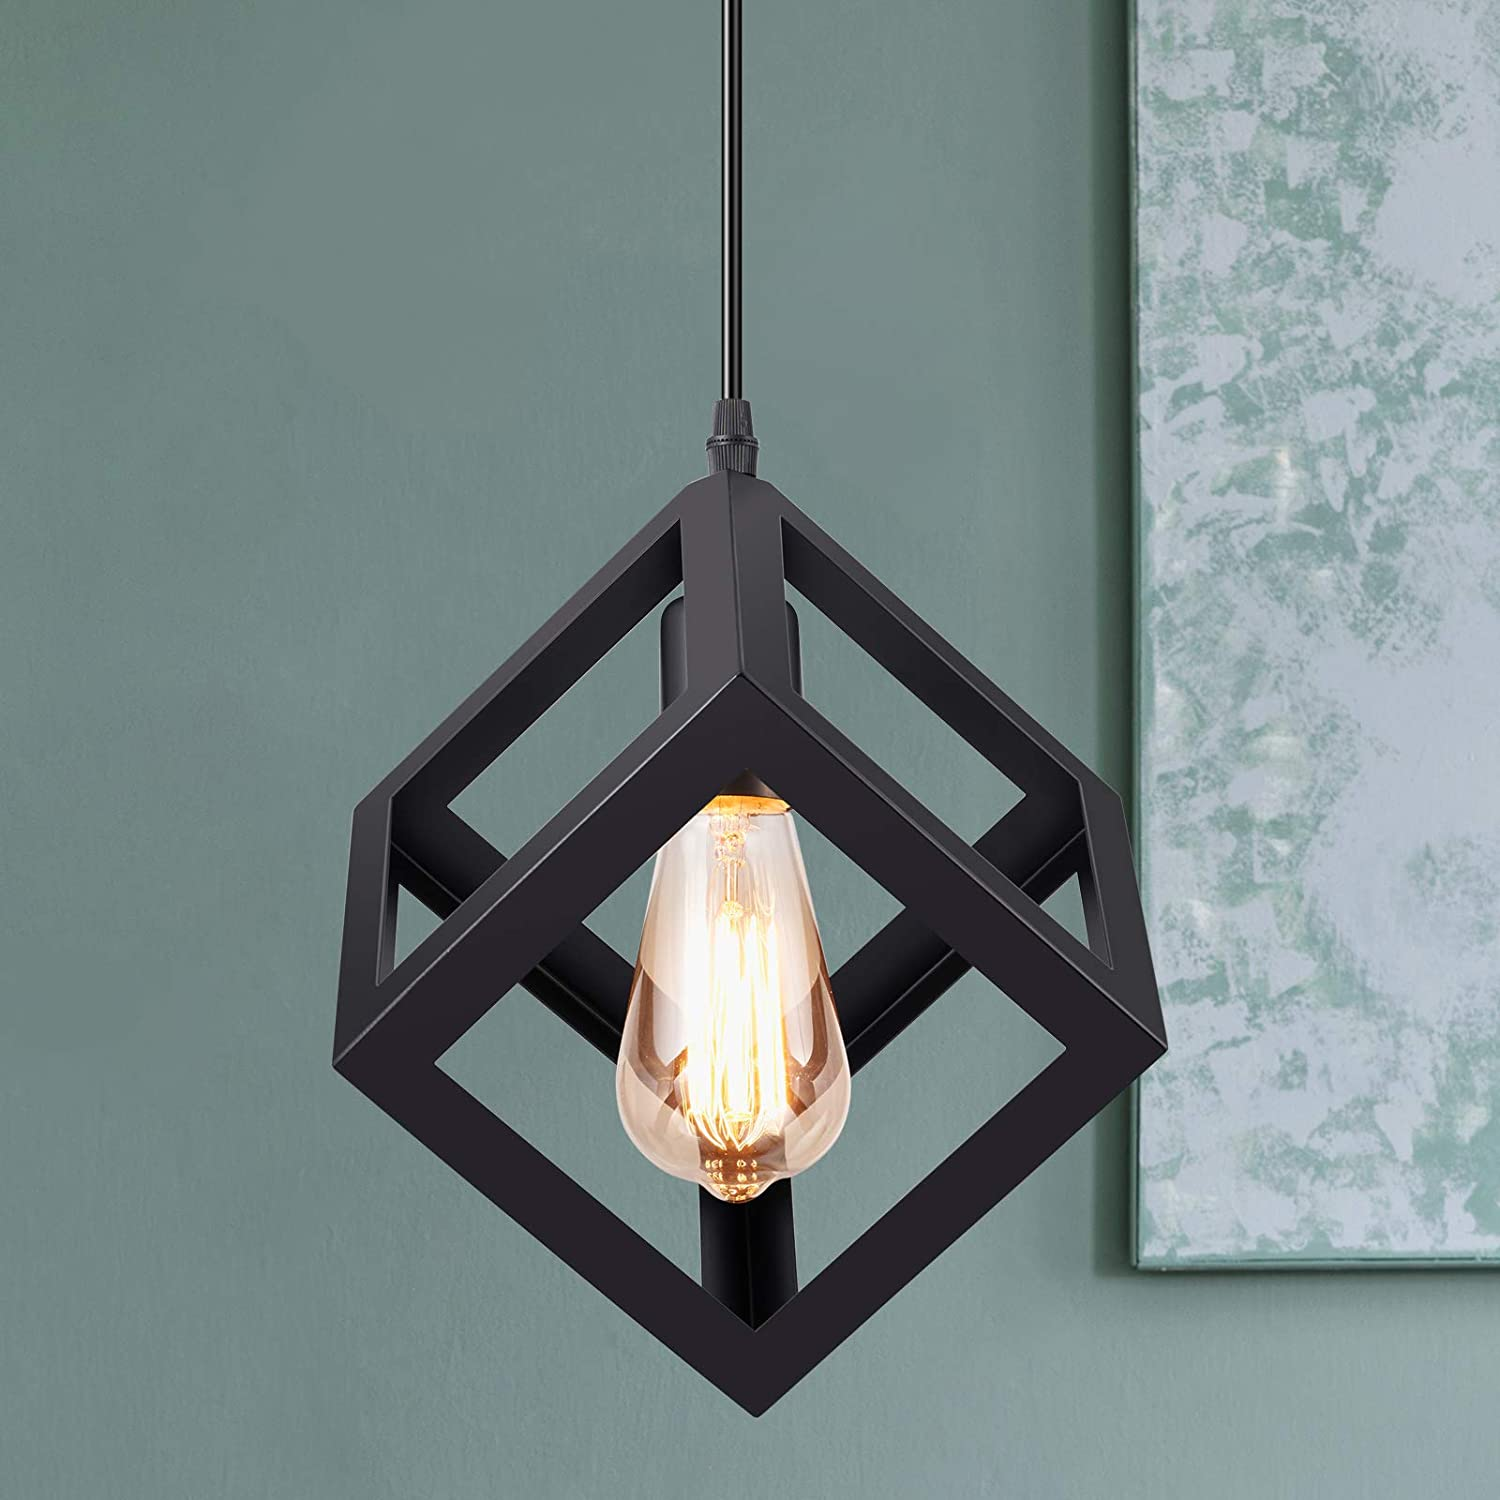 Ceiling Pendant Light Black Square Wire Cage Lamp Lighting~1493 - LEDSone UK Ltd